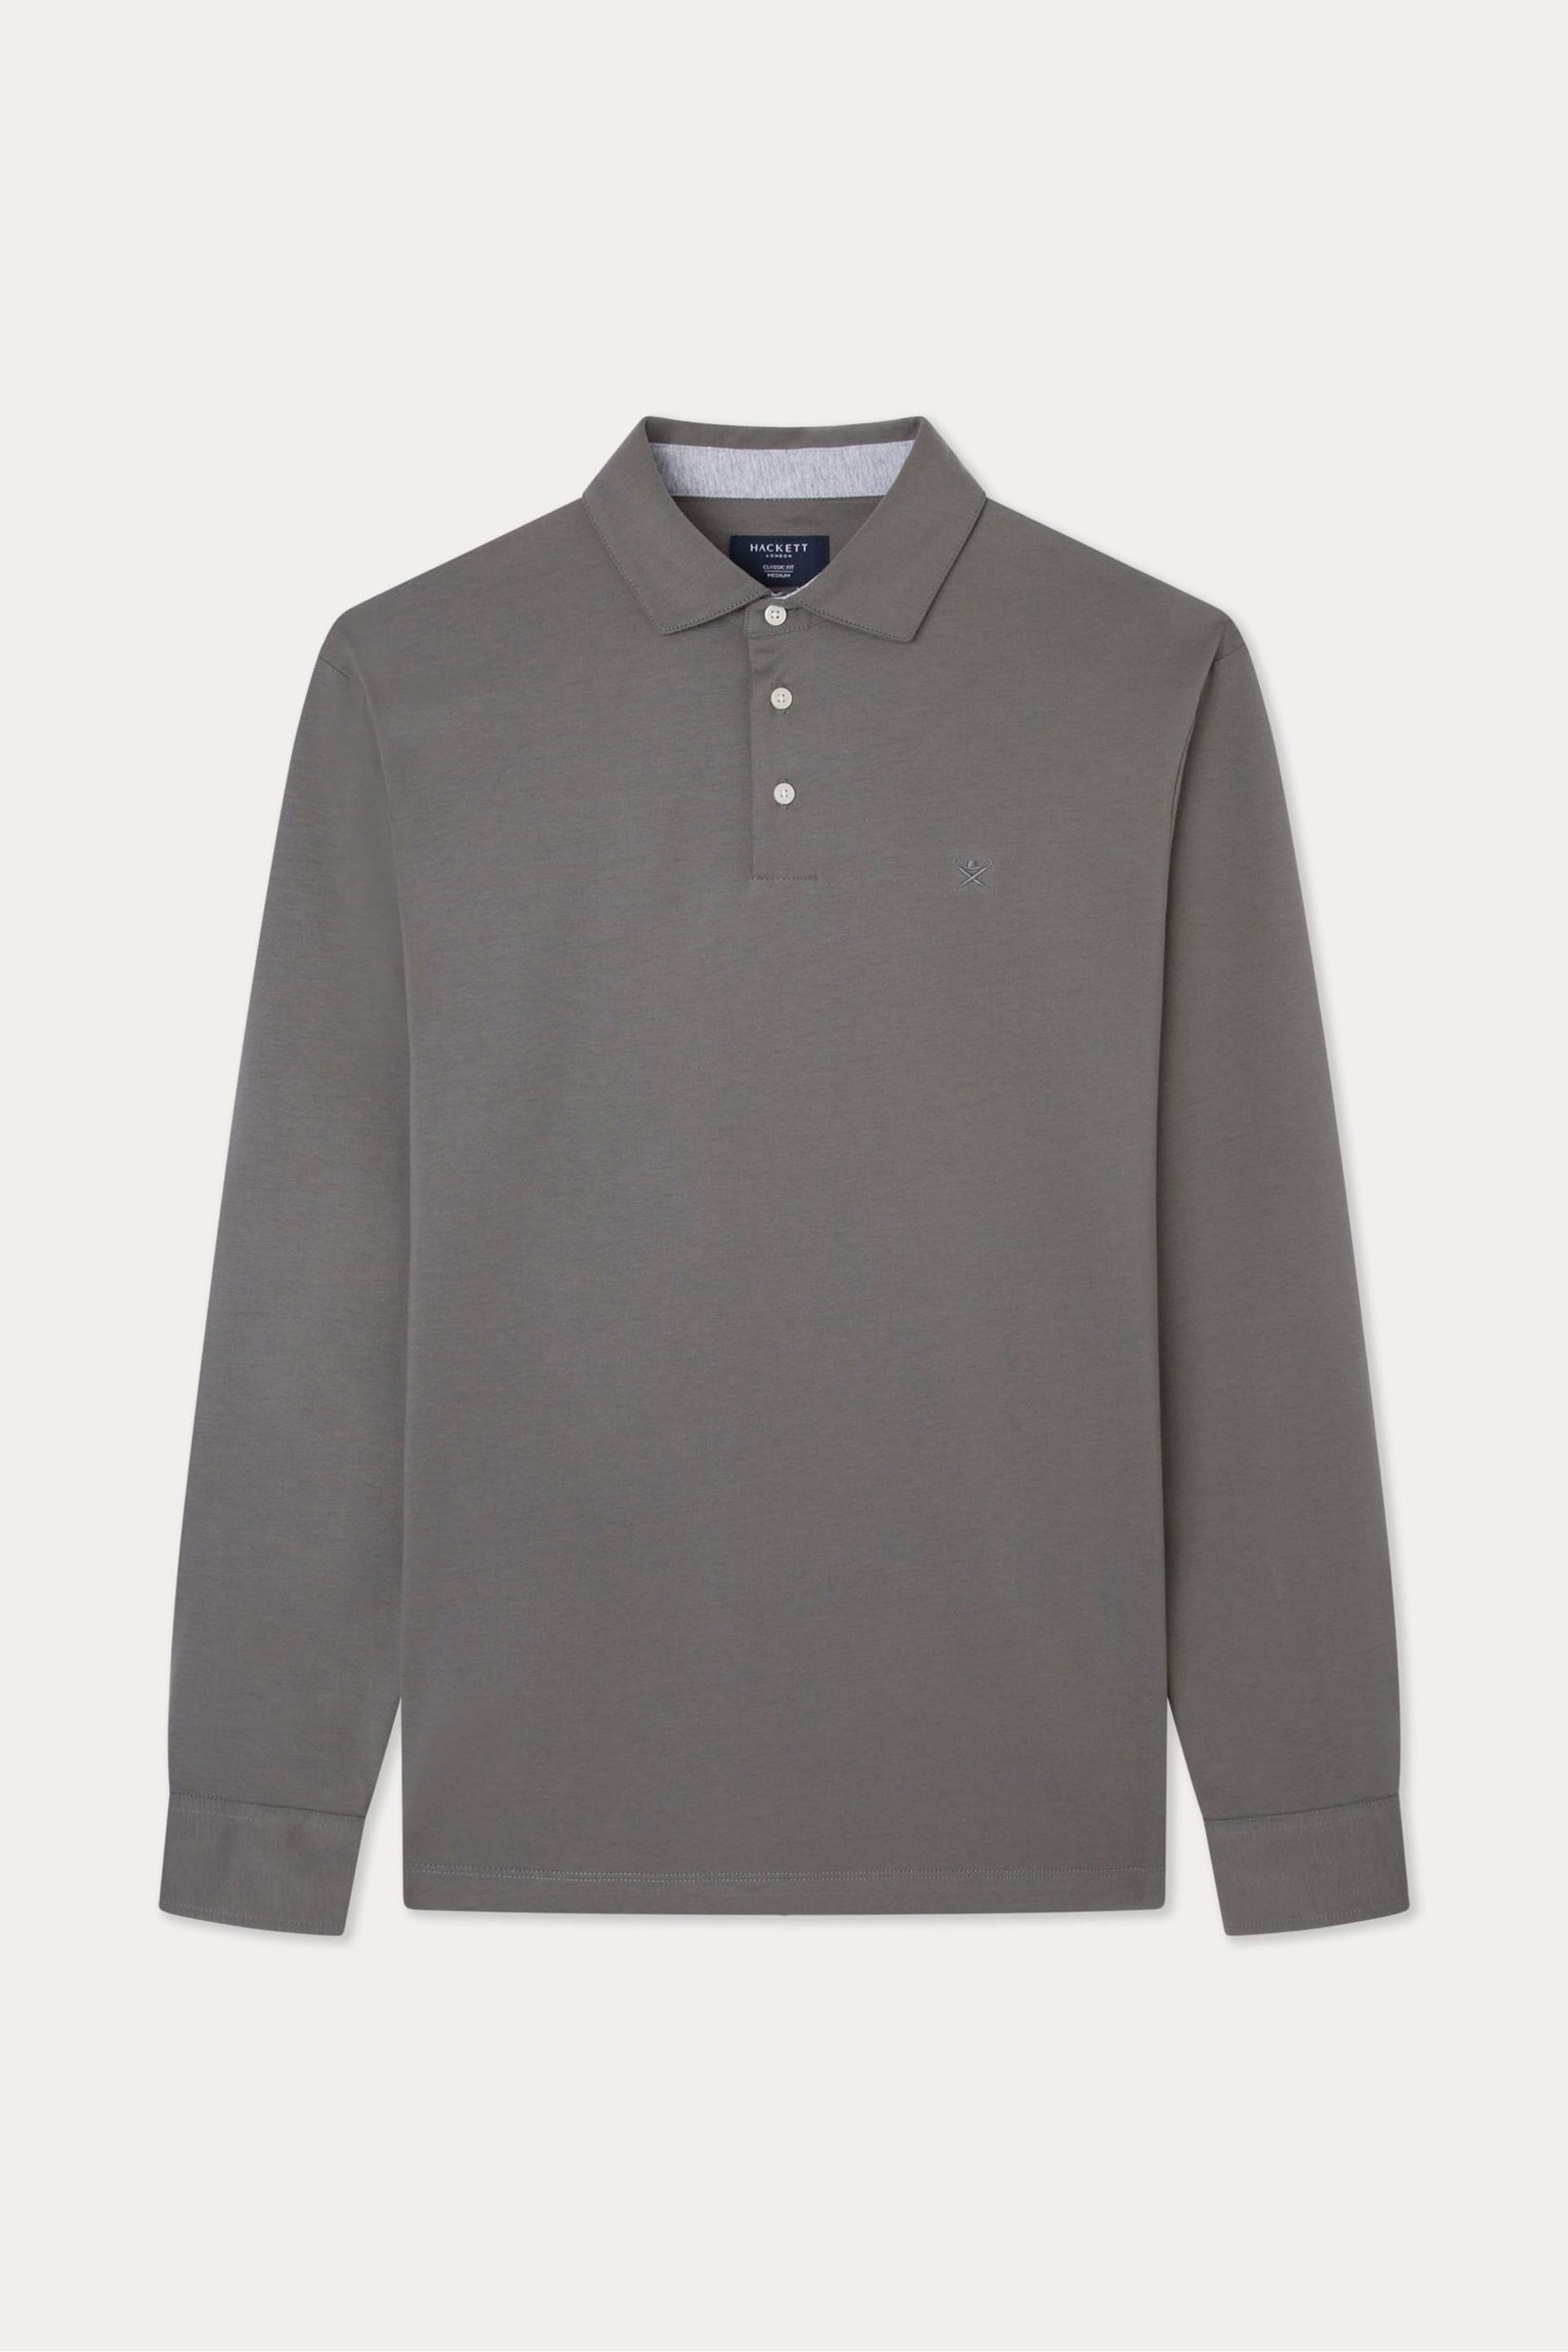 Hackett London Men Grey Polo Shirt - Image 1 of 3